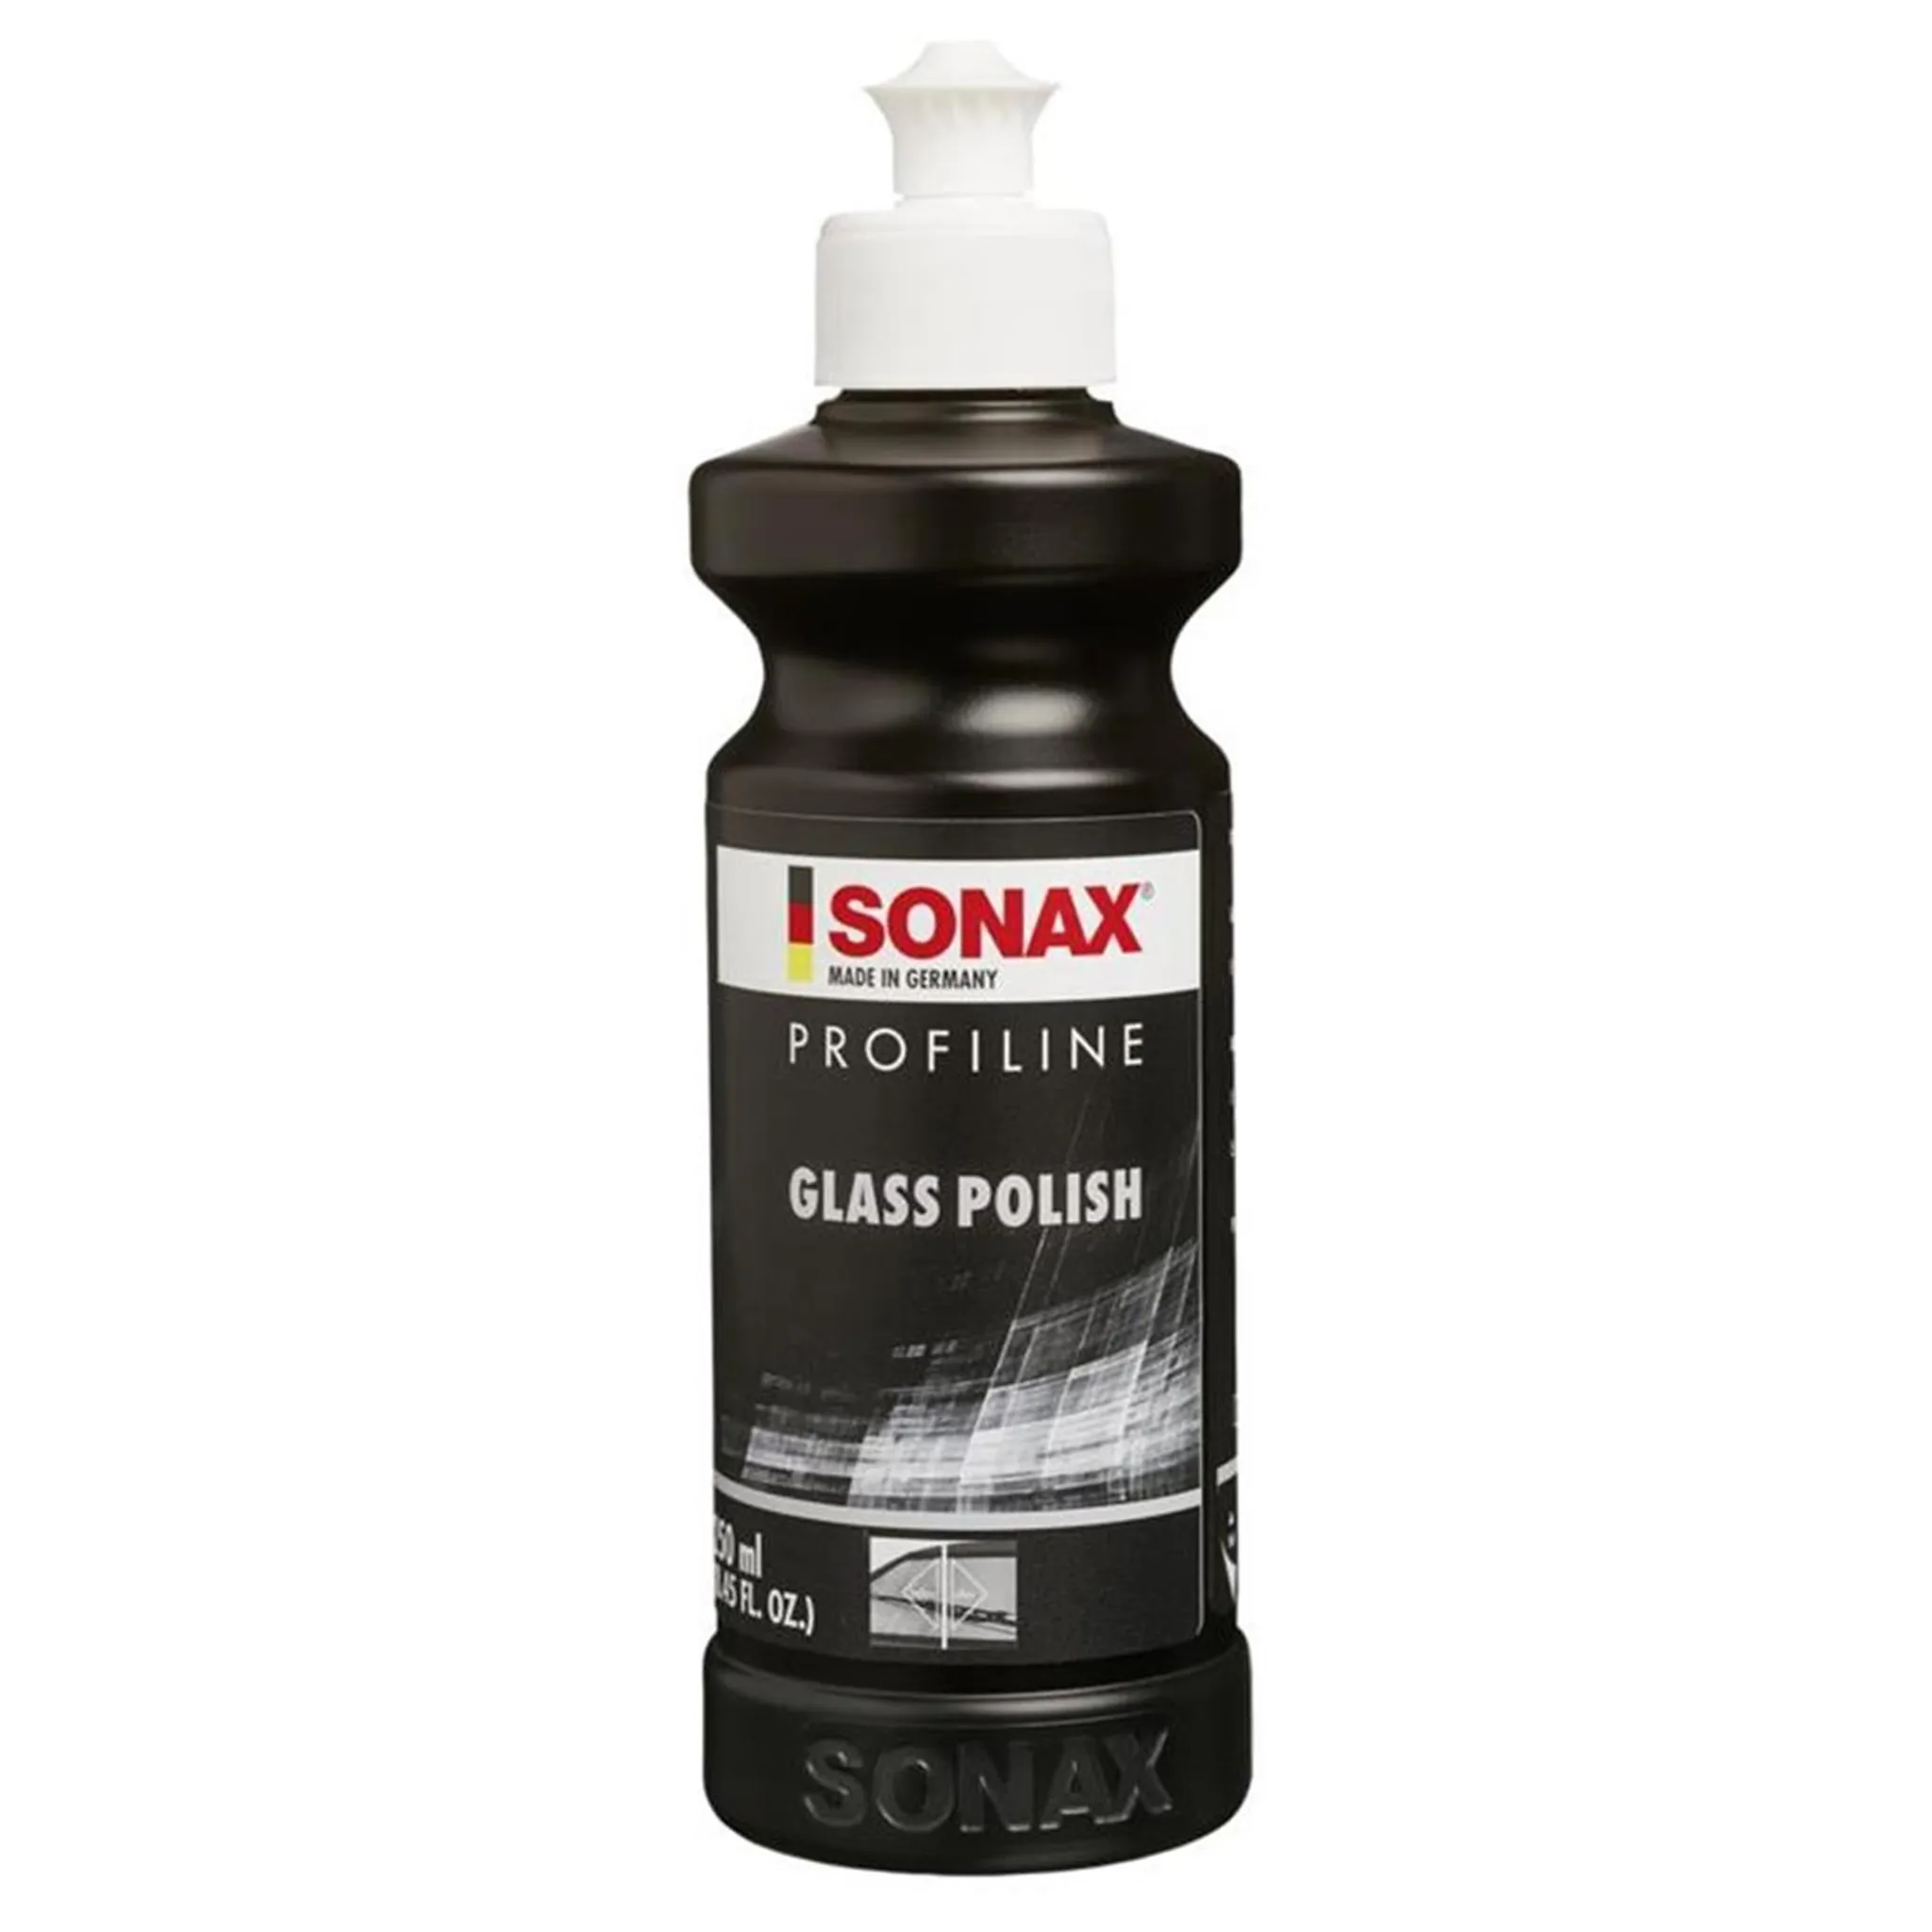 Sonax Profiline Glass Polish Politur Kfz